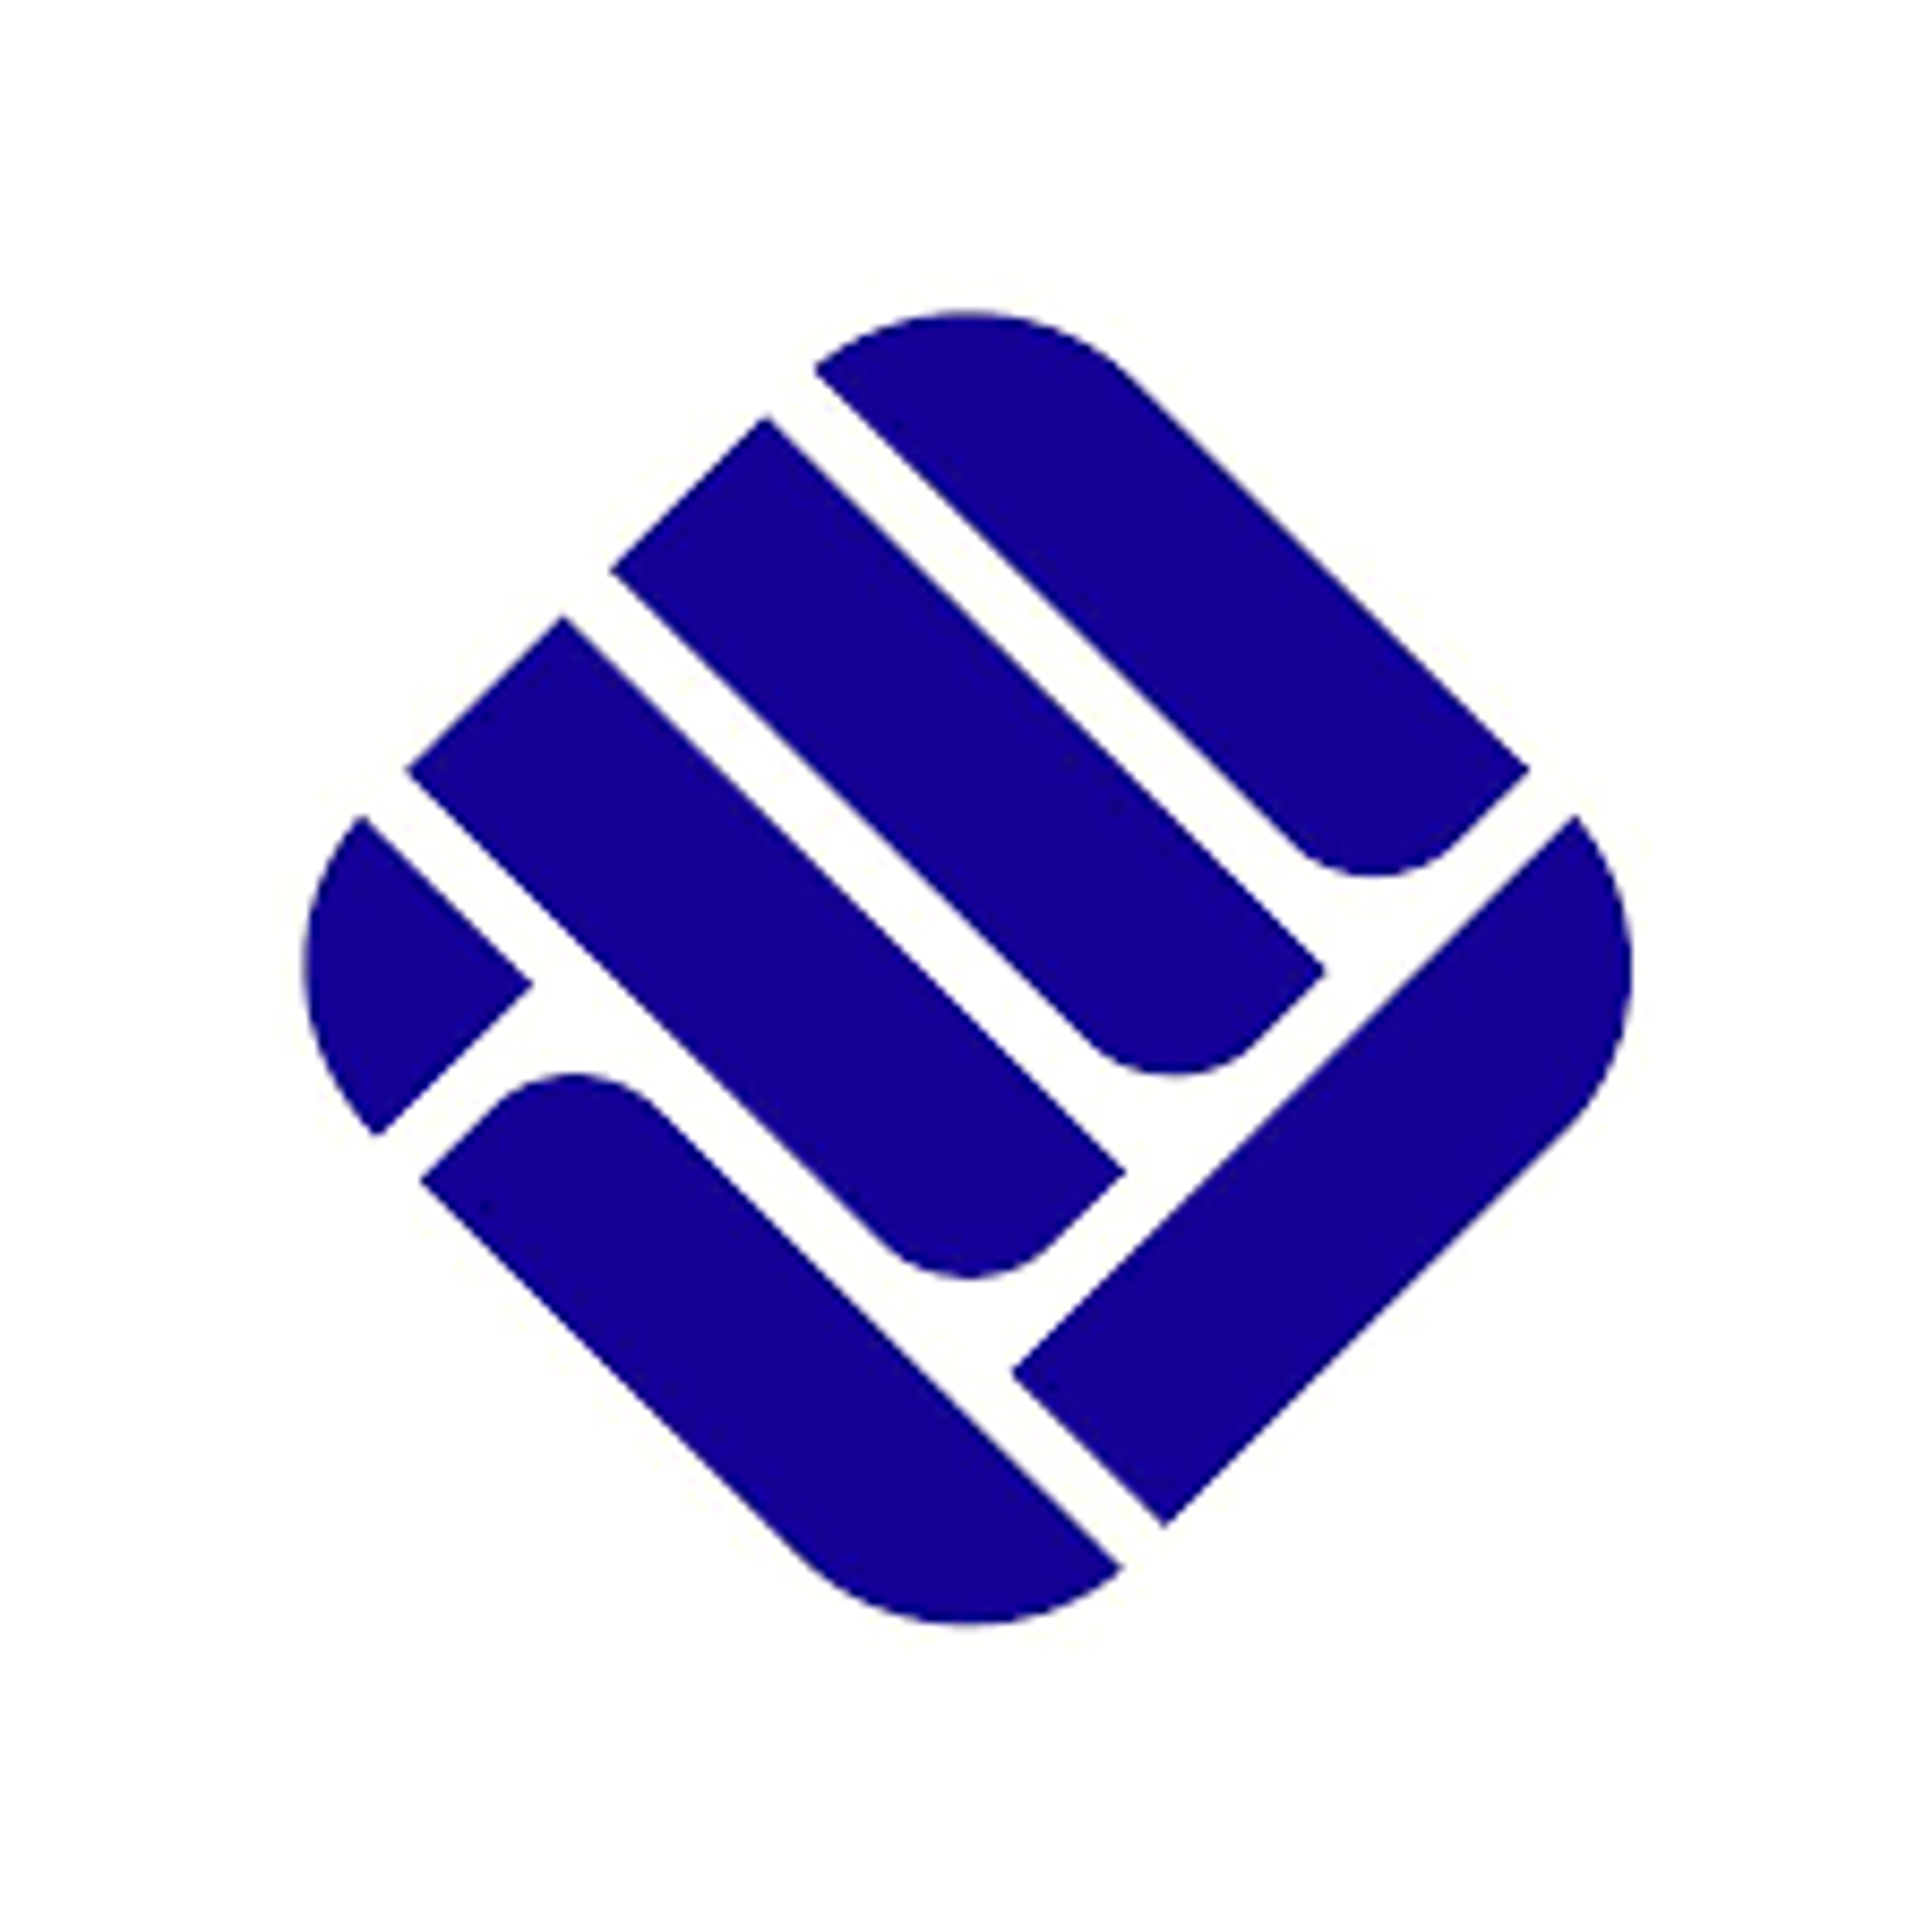 Logo FH Münster